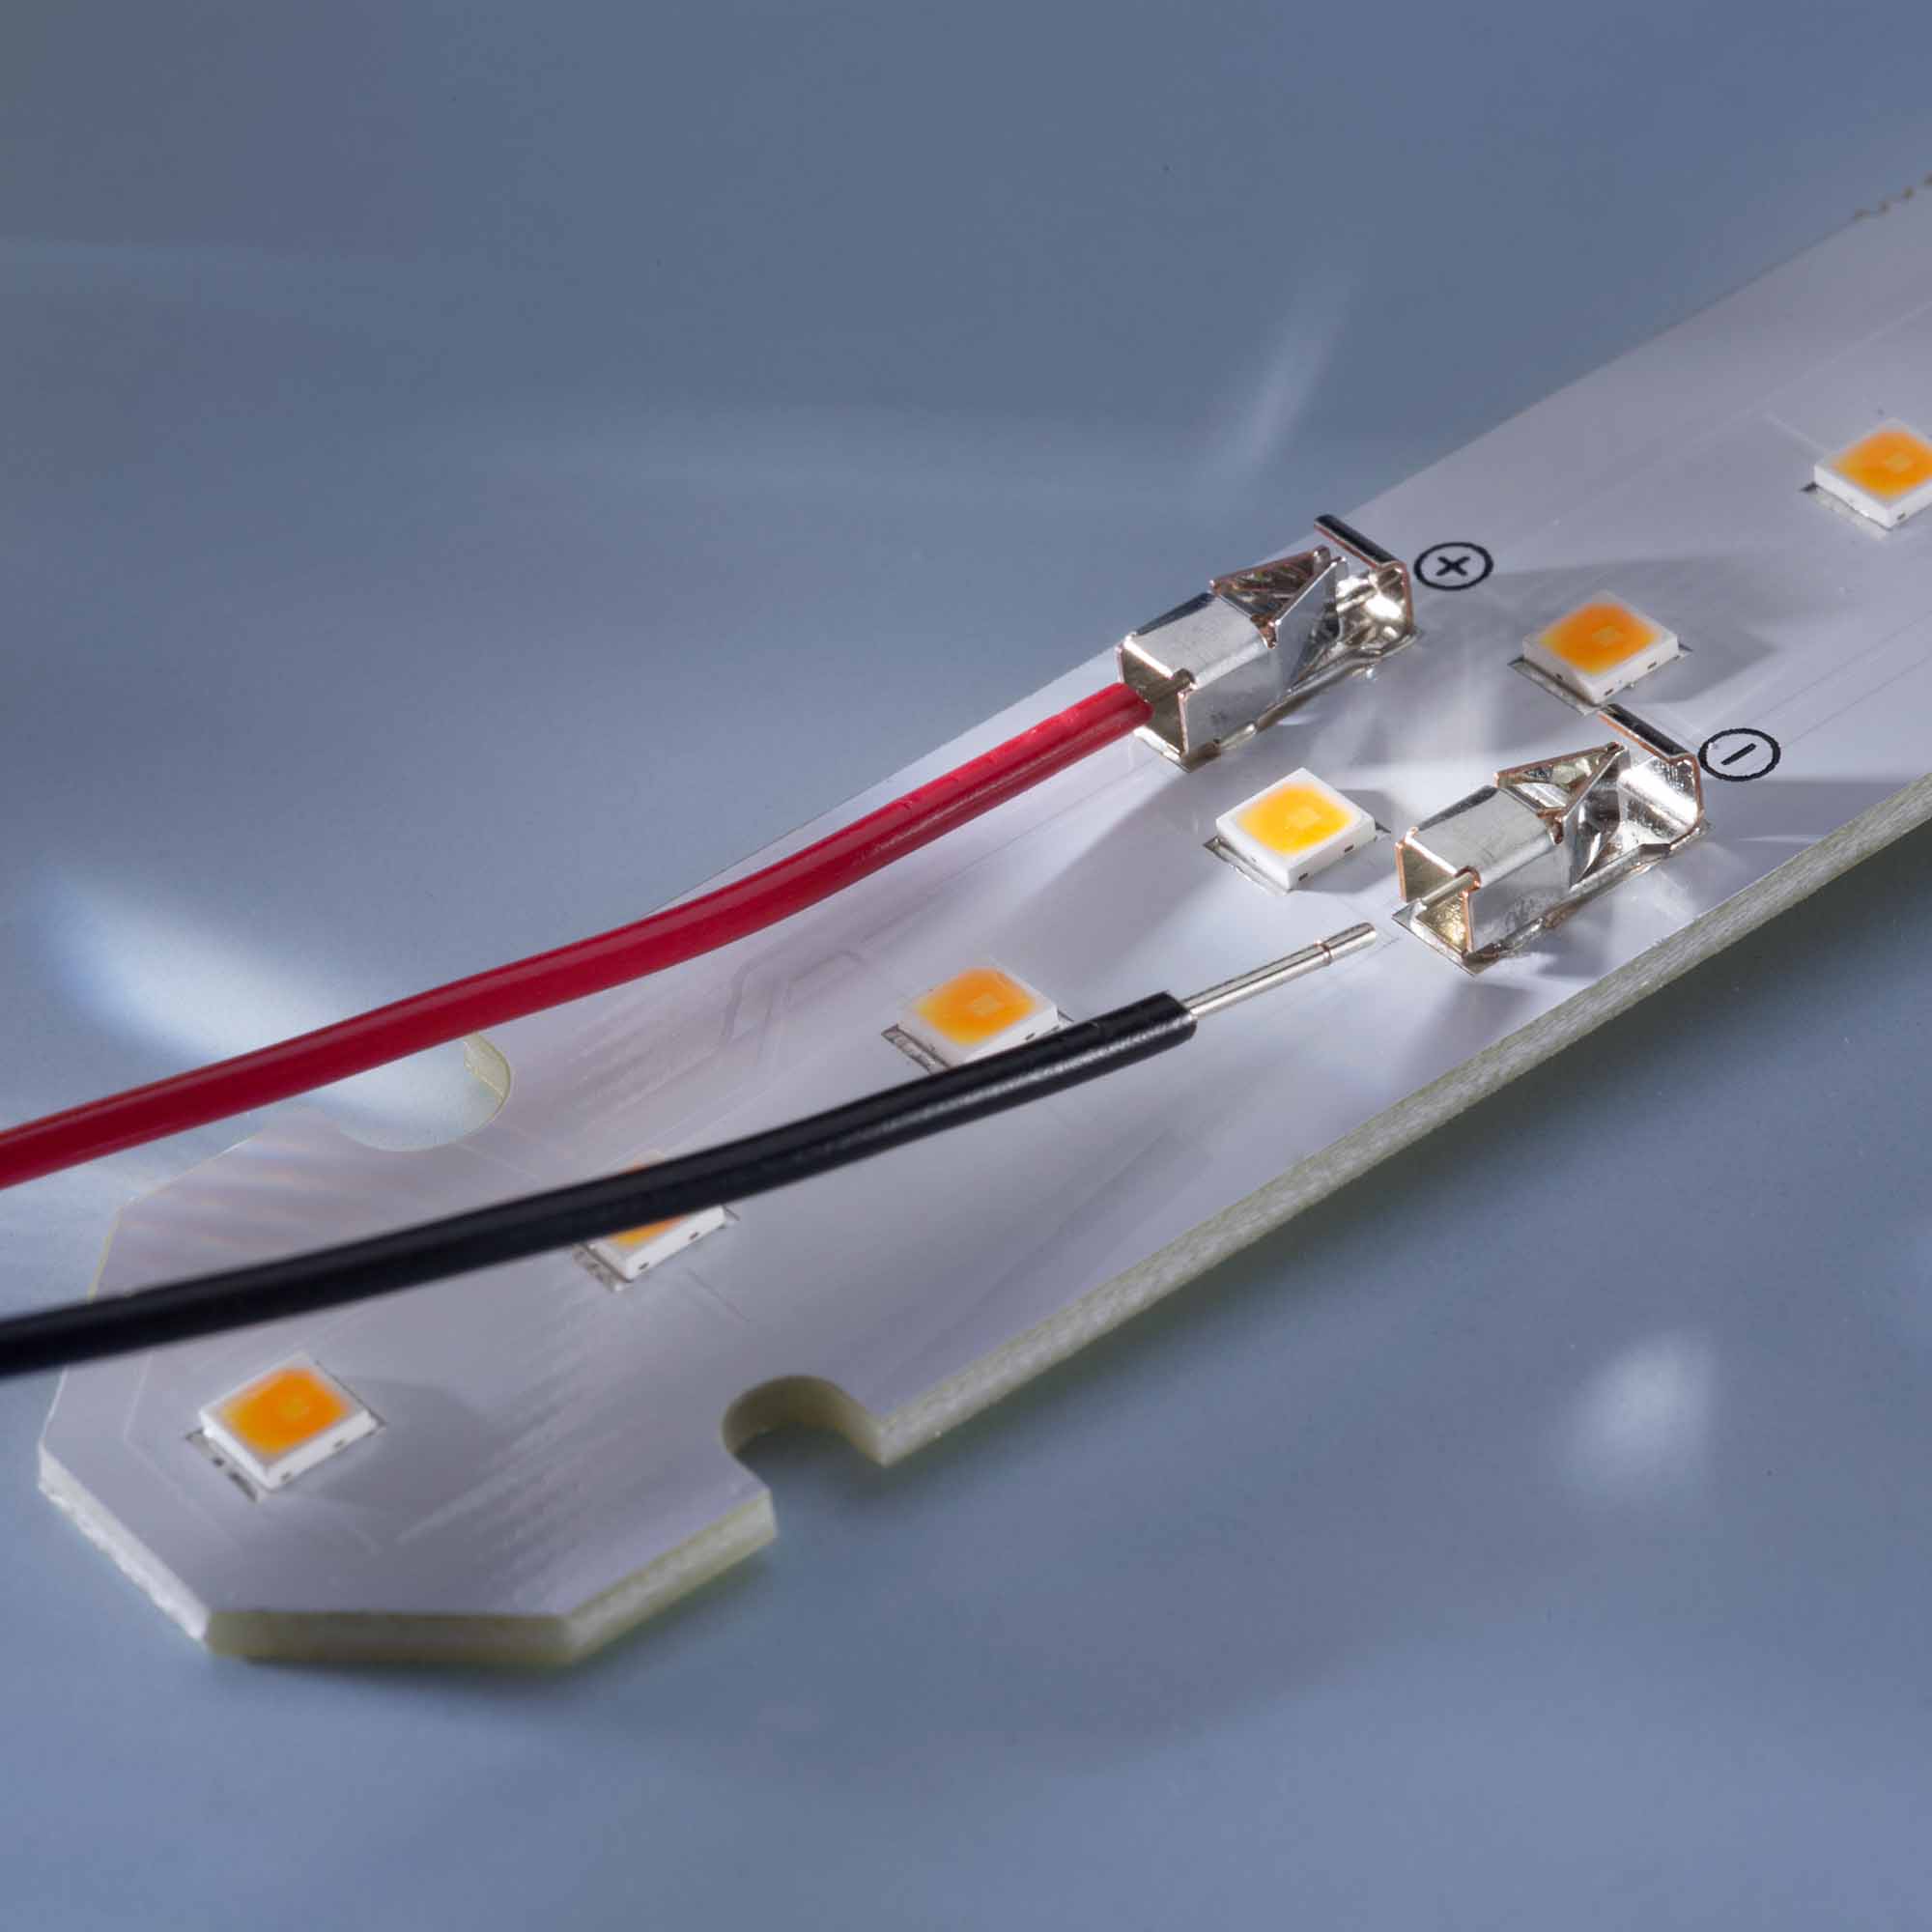 LumiBar-26-3098+ Nichia tira LED Optisolis CRI99 blanco frío 6500K 740lm 14PPF 175mA 37,5V 26 LEDs módulo de 28cm (2643lm/m 24W/m)